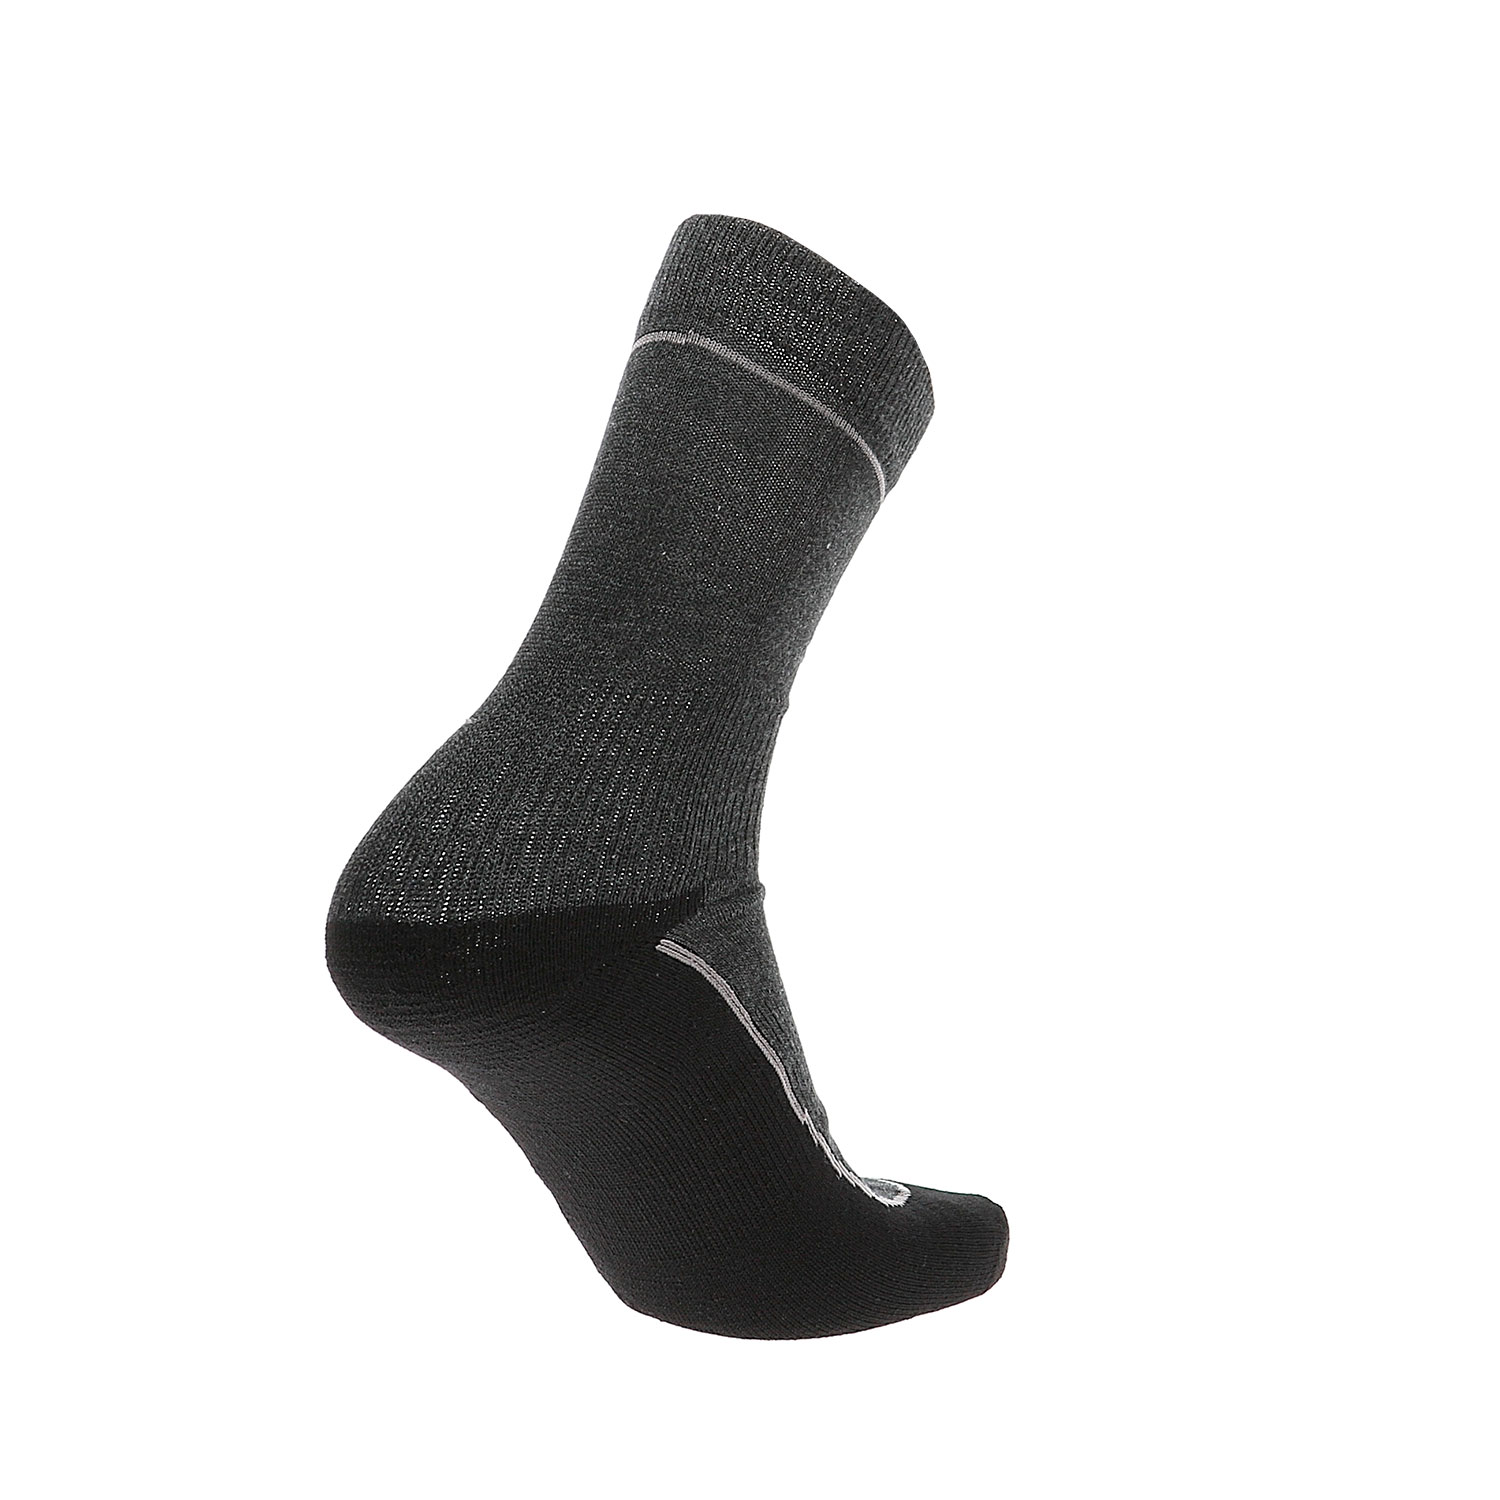 Mico SuperThermo Medium Weight Socks - Antracite